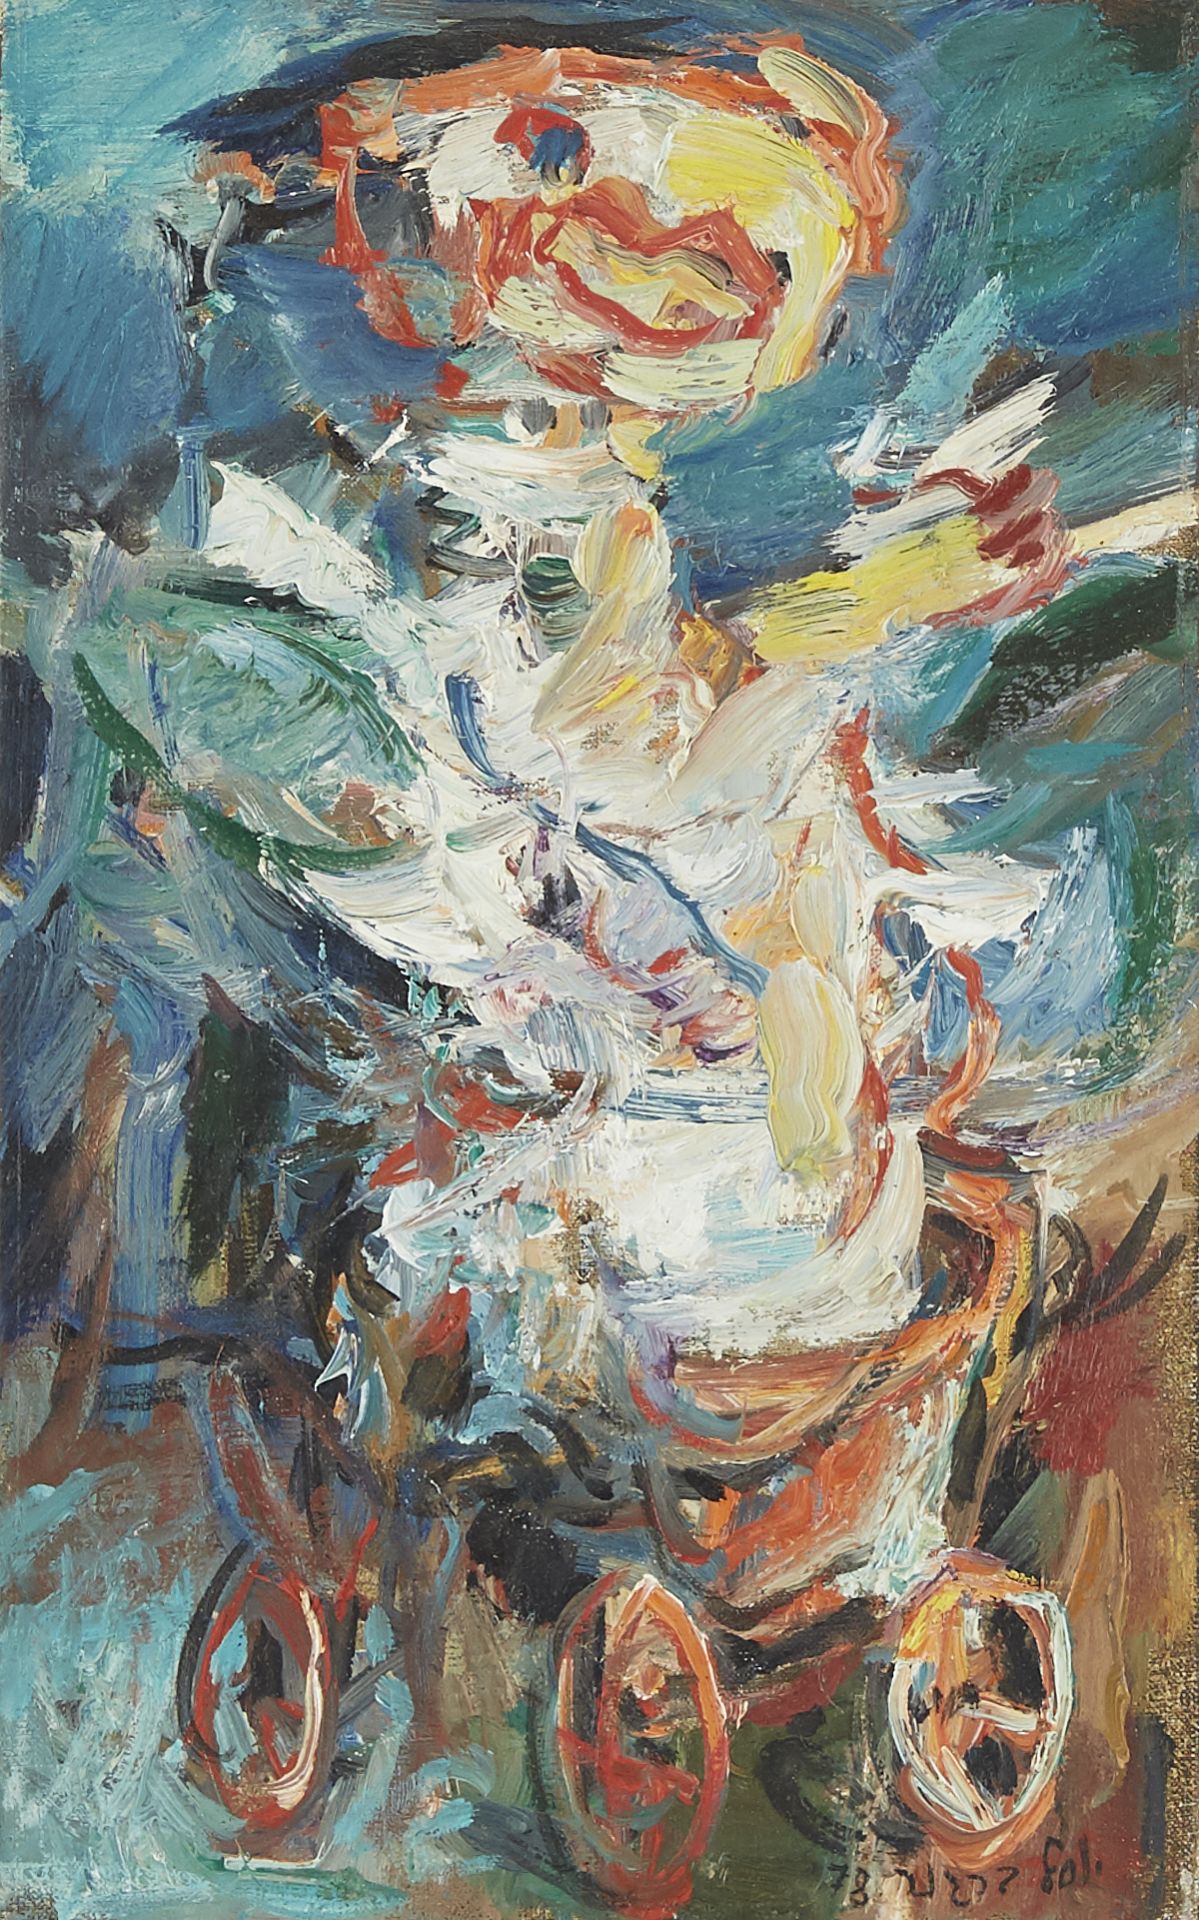 Yosl Bergner "White Jack on Wheels" Oil on Canvas